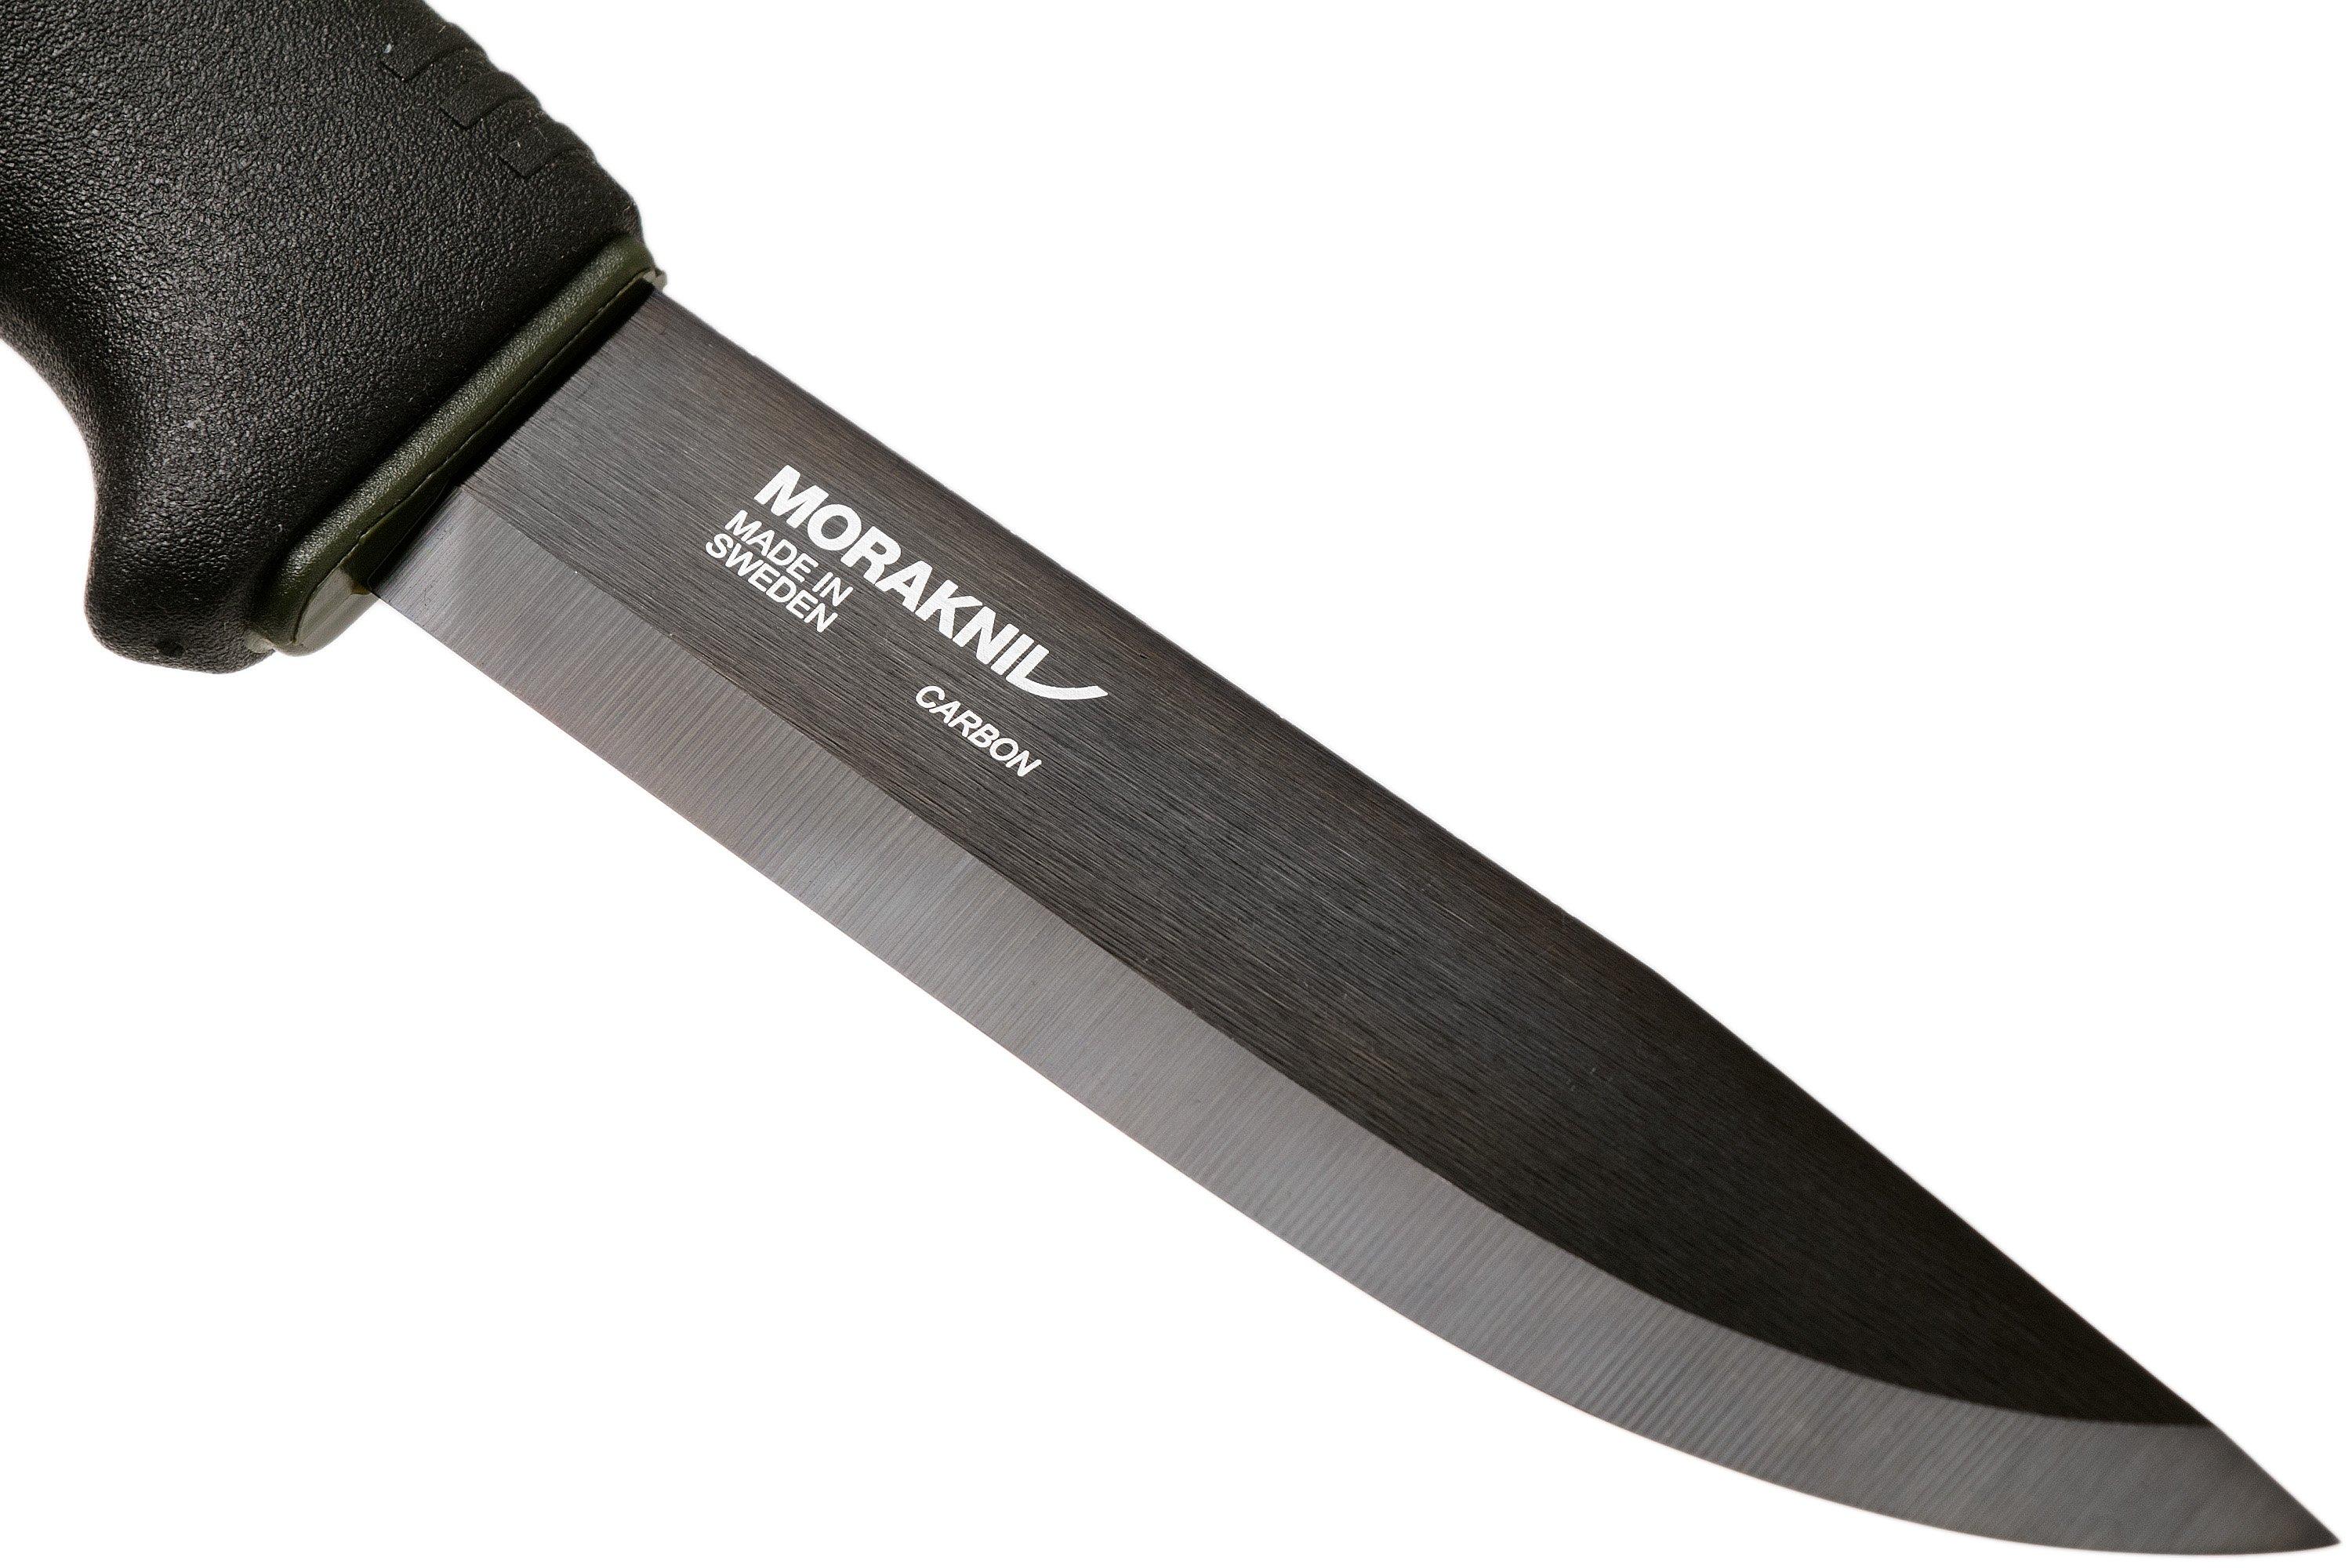 Purchase the Mora Knife Bushcraft Survival black by ASMC